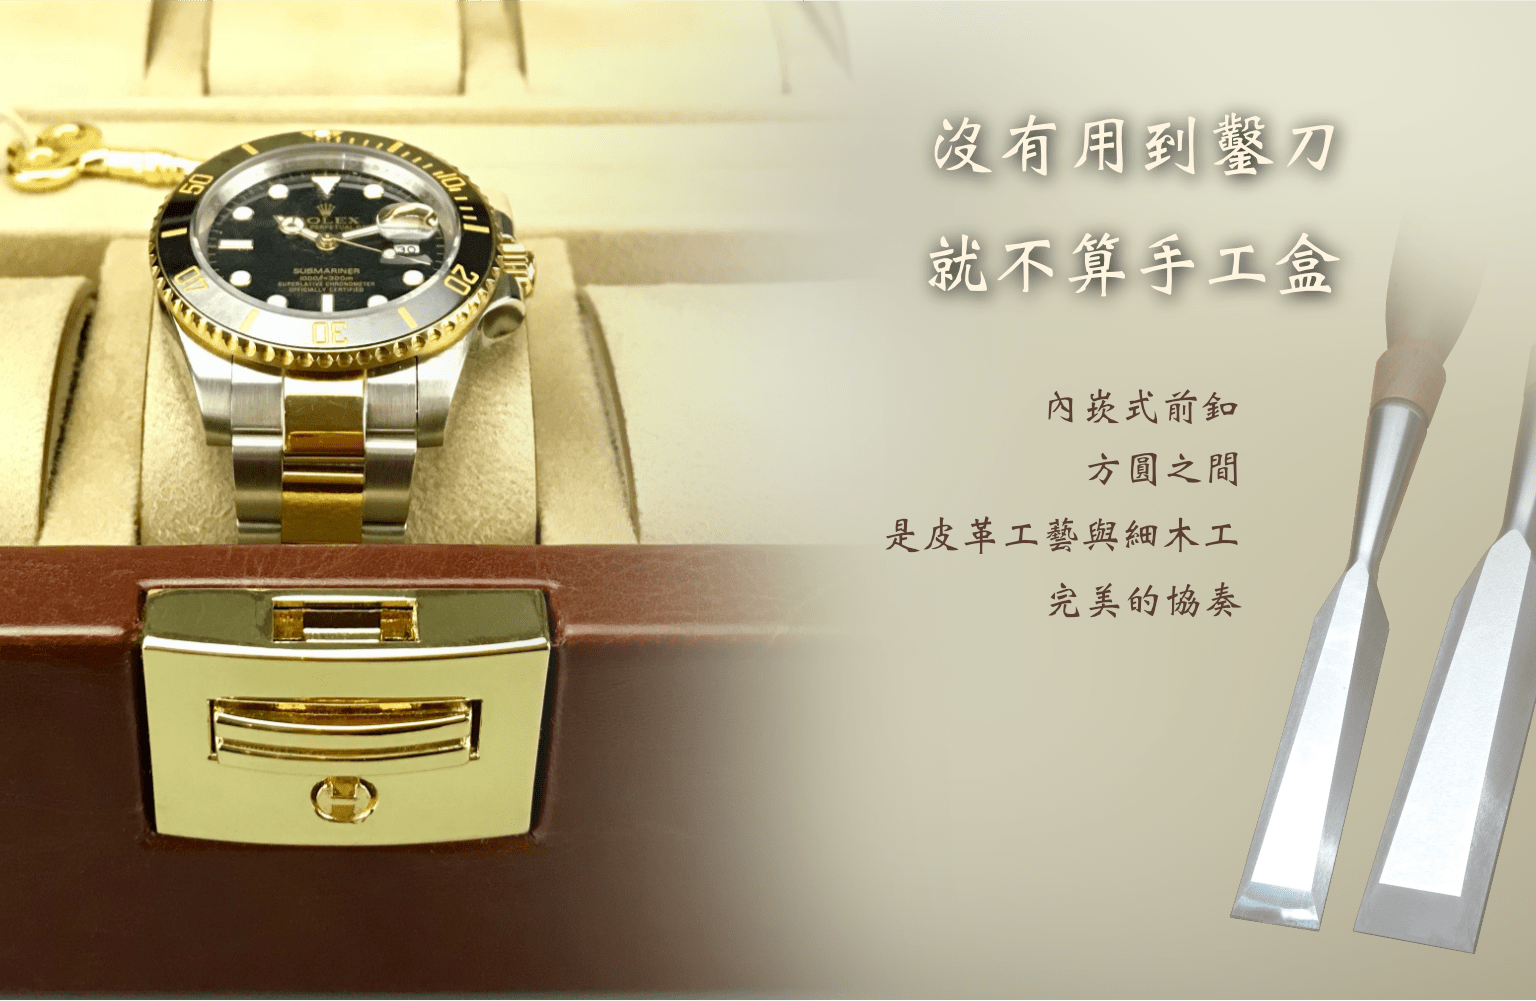 14A 總裁腕錶收藏盒，是宏祥錦盒五十年來做得最好的錶盒，設計起源於2018年為全球唯一14Ａ評等的央行總裁所設計的退休紀念獎章盒，在手工盒的每個工序都用最高標準製作，是最高等級的產品包裝盒